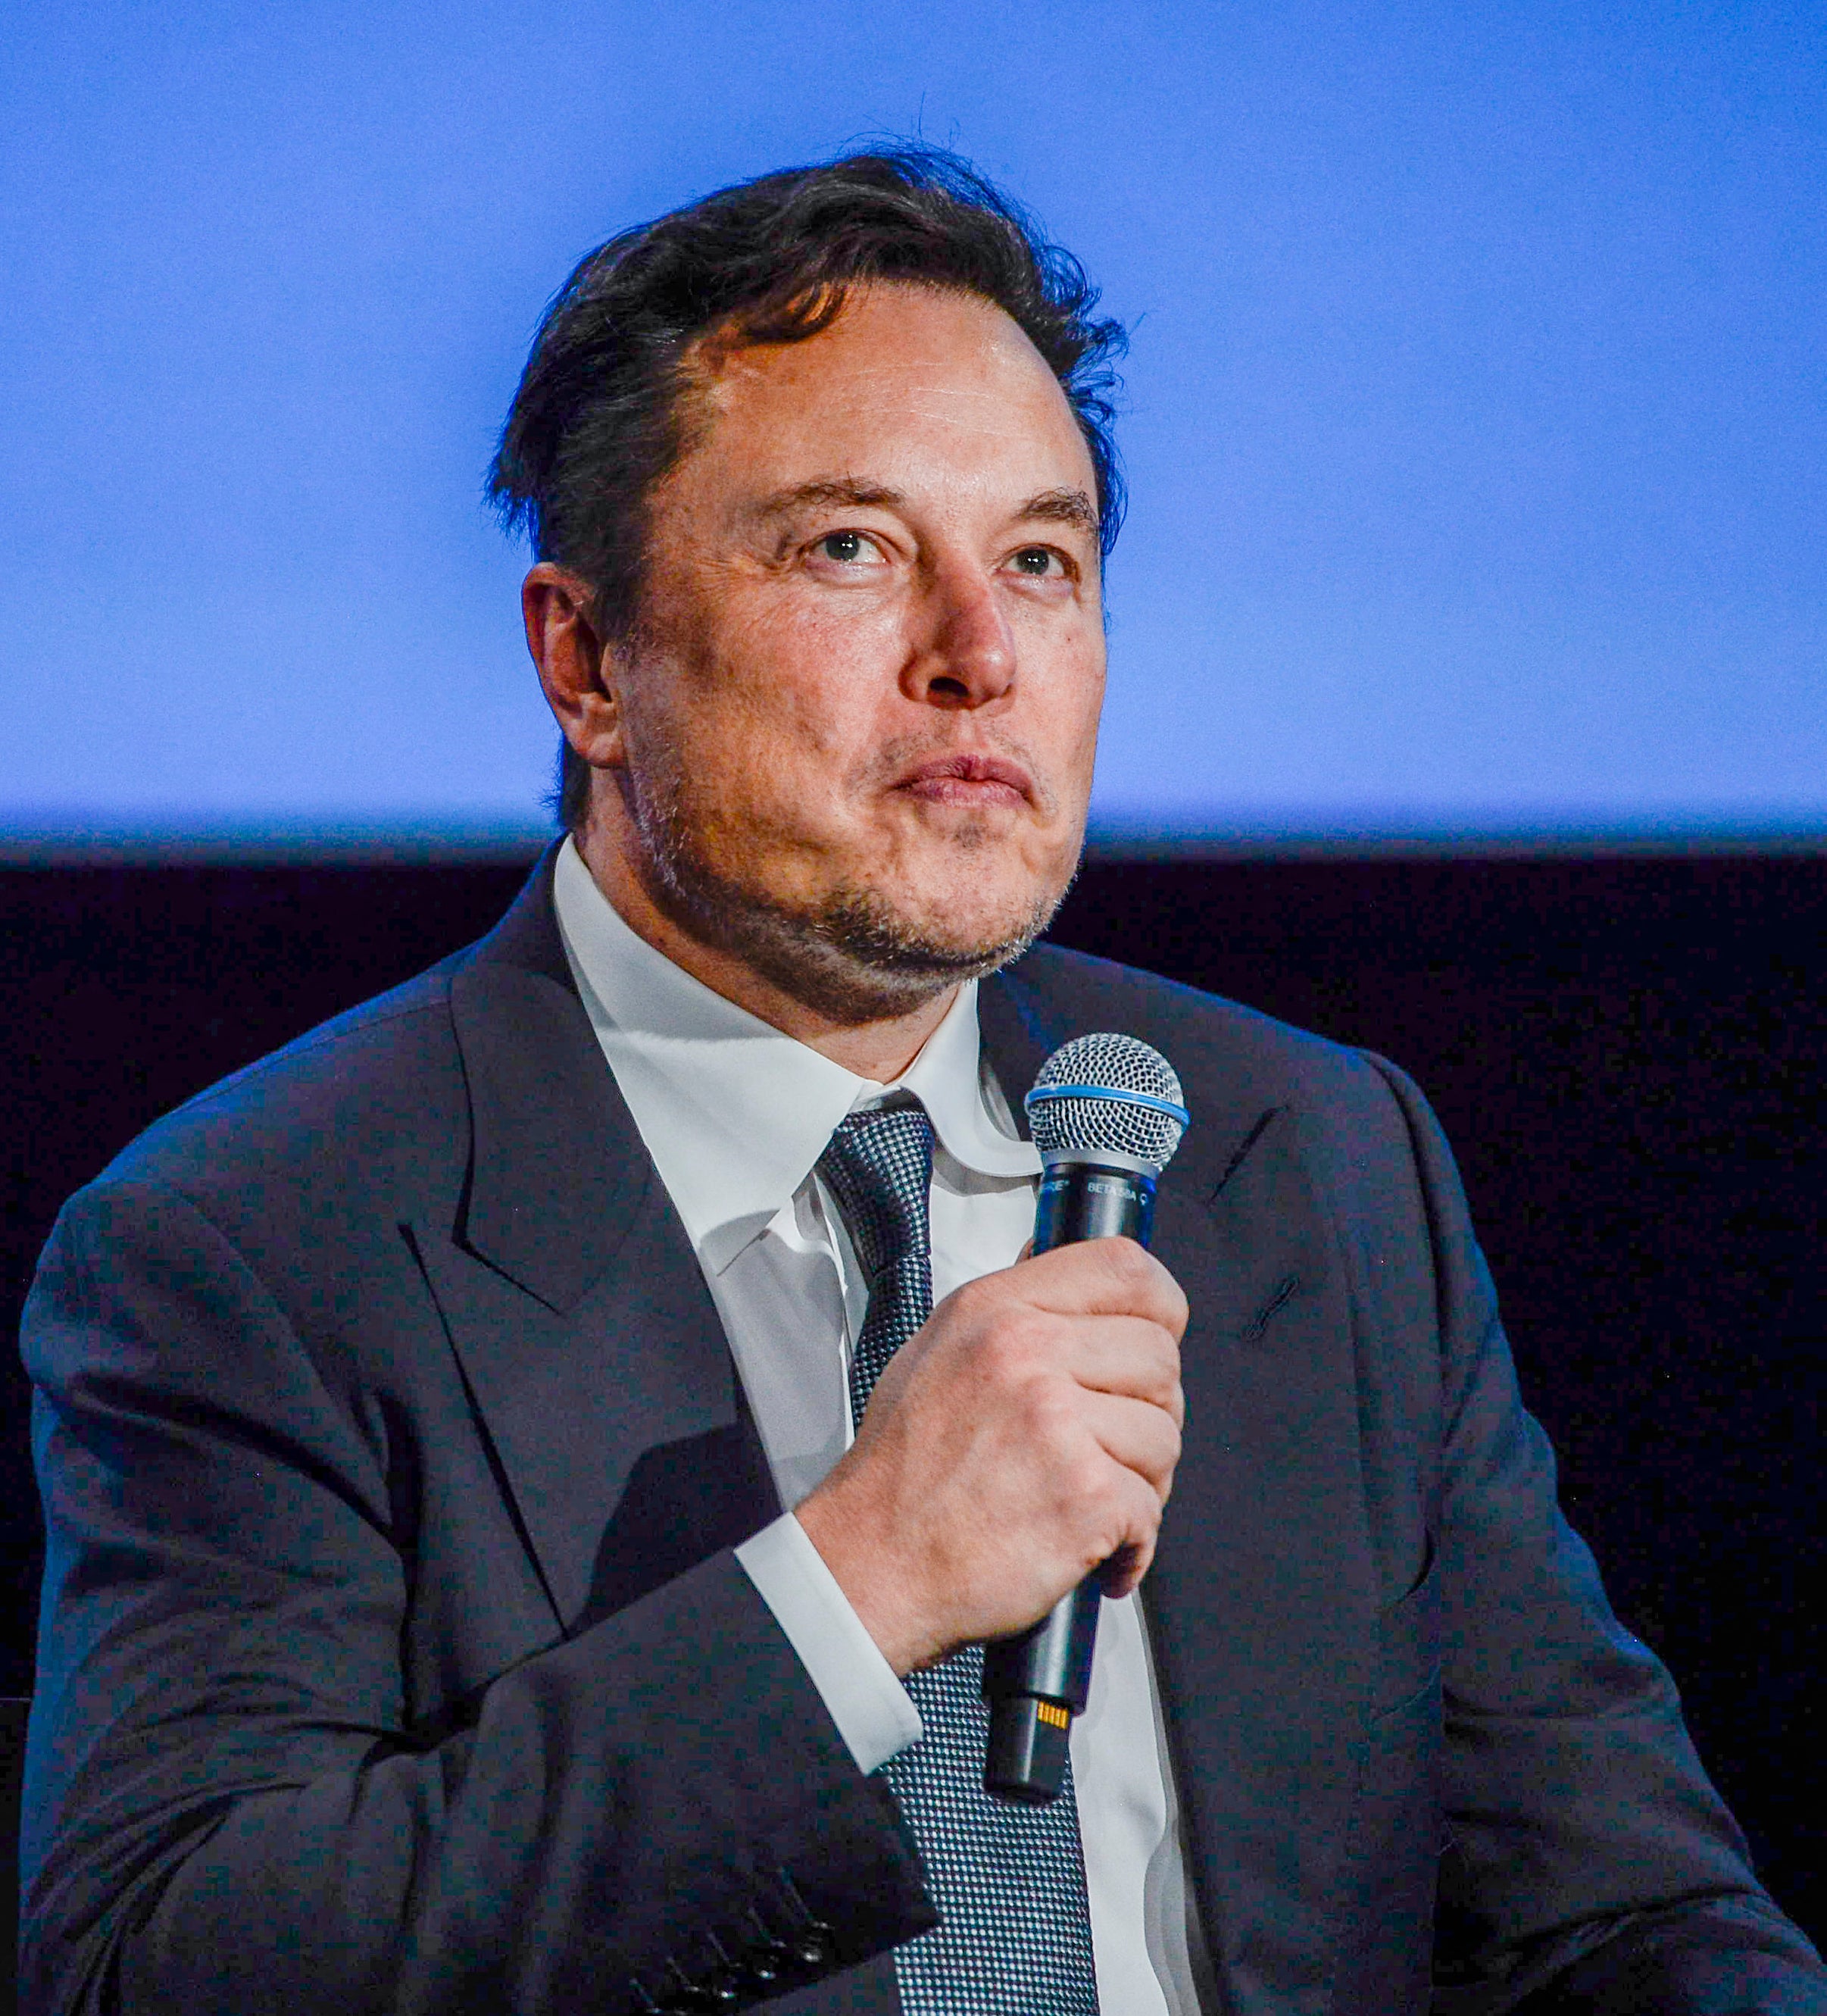 Elon holding a mic